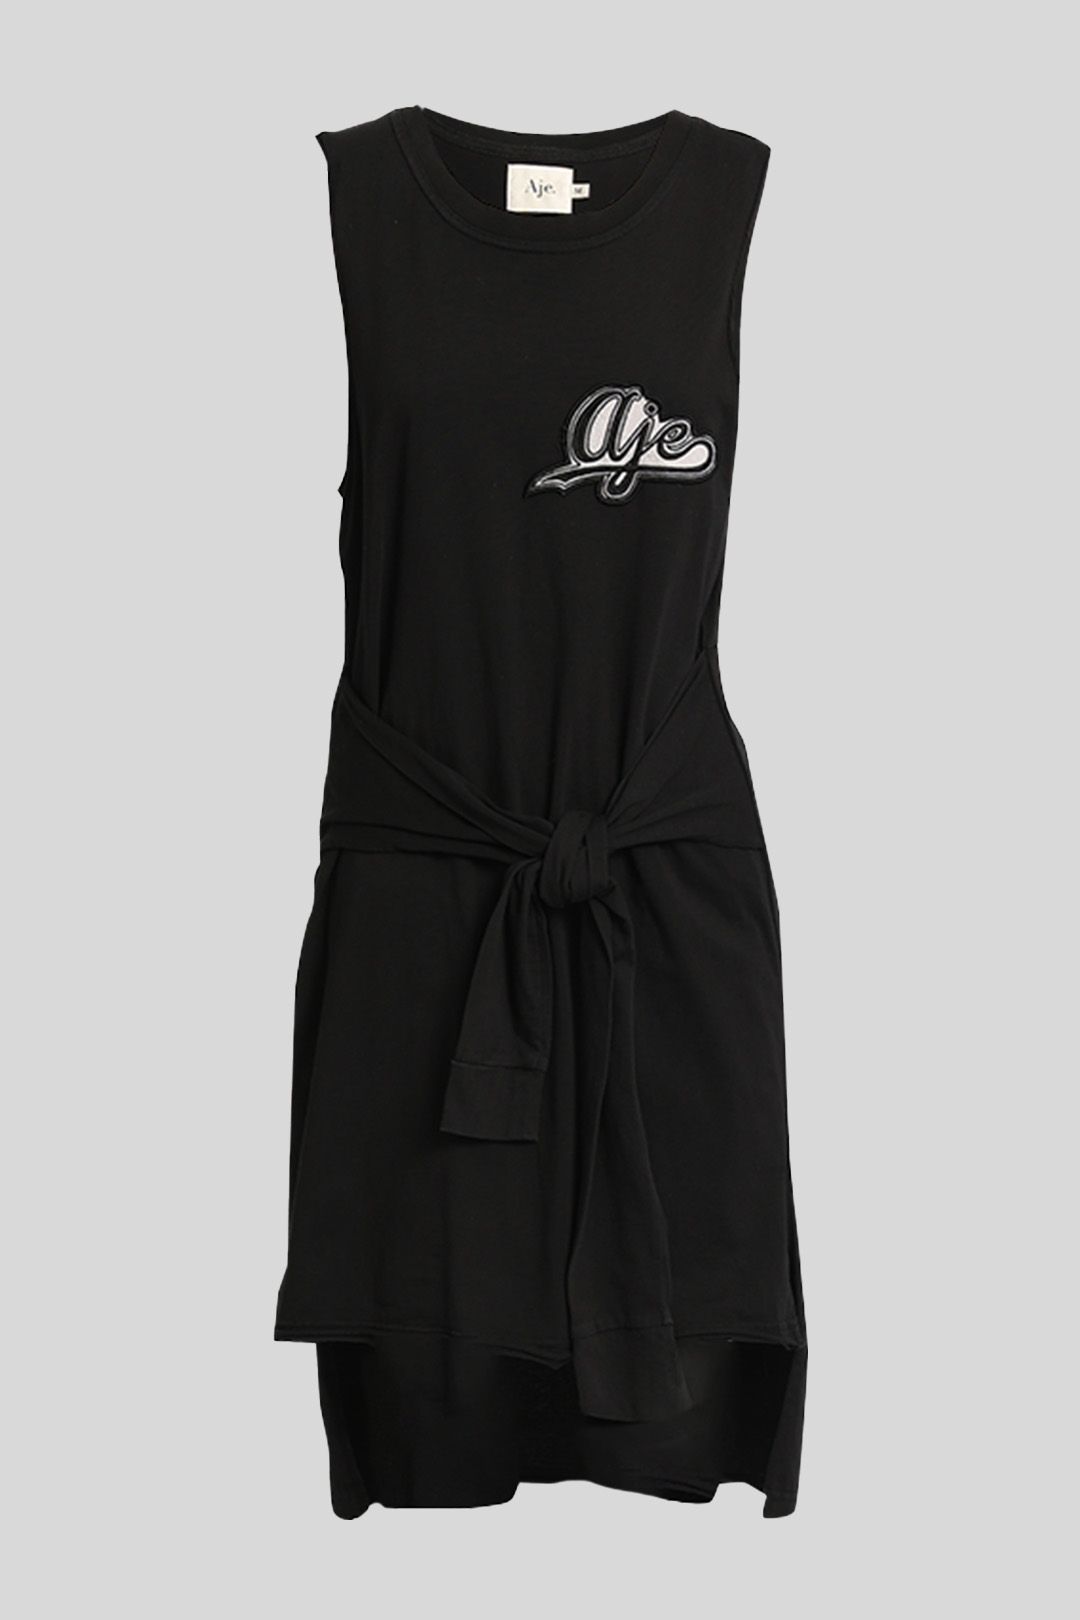 AJE - Logo Mini Dress